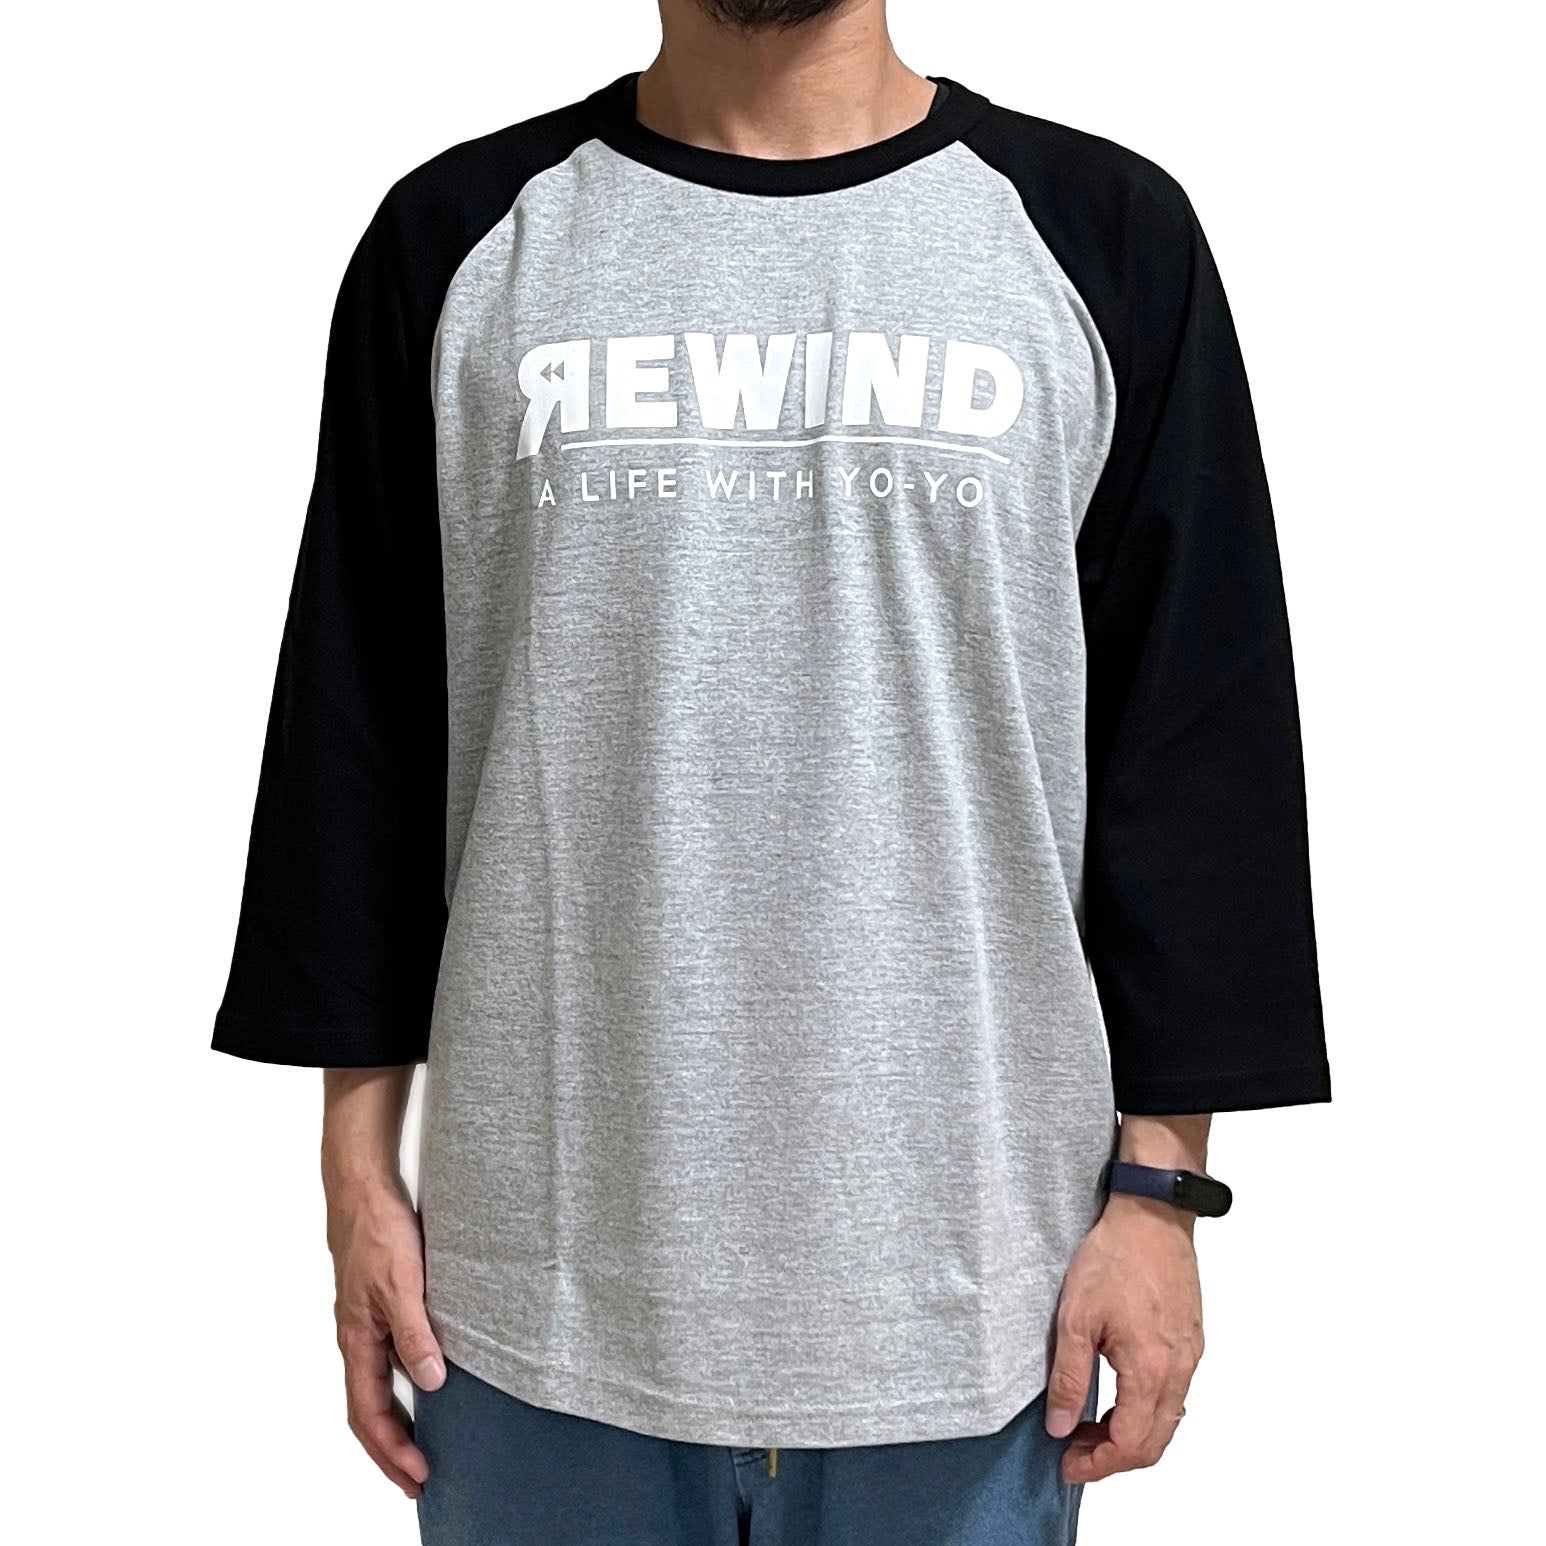 REWIND 7分袖 Tシャツ (グレー / ブラック)